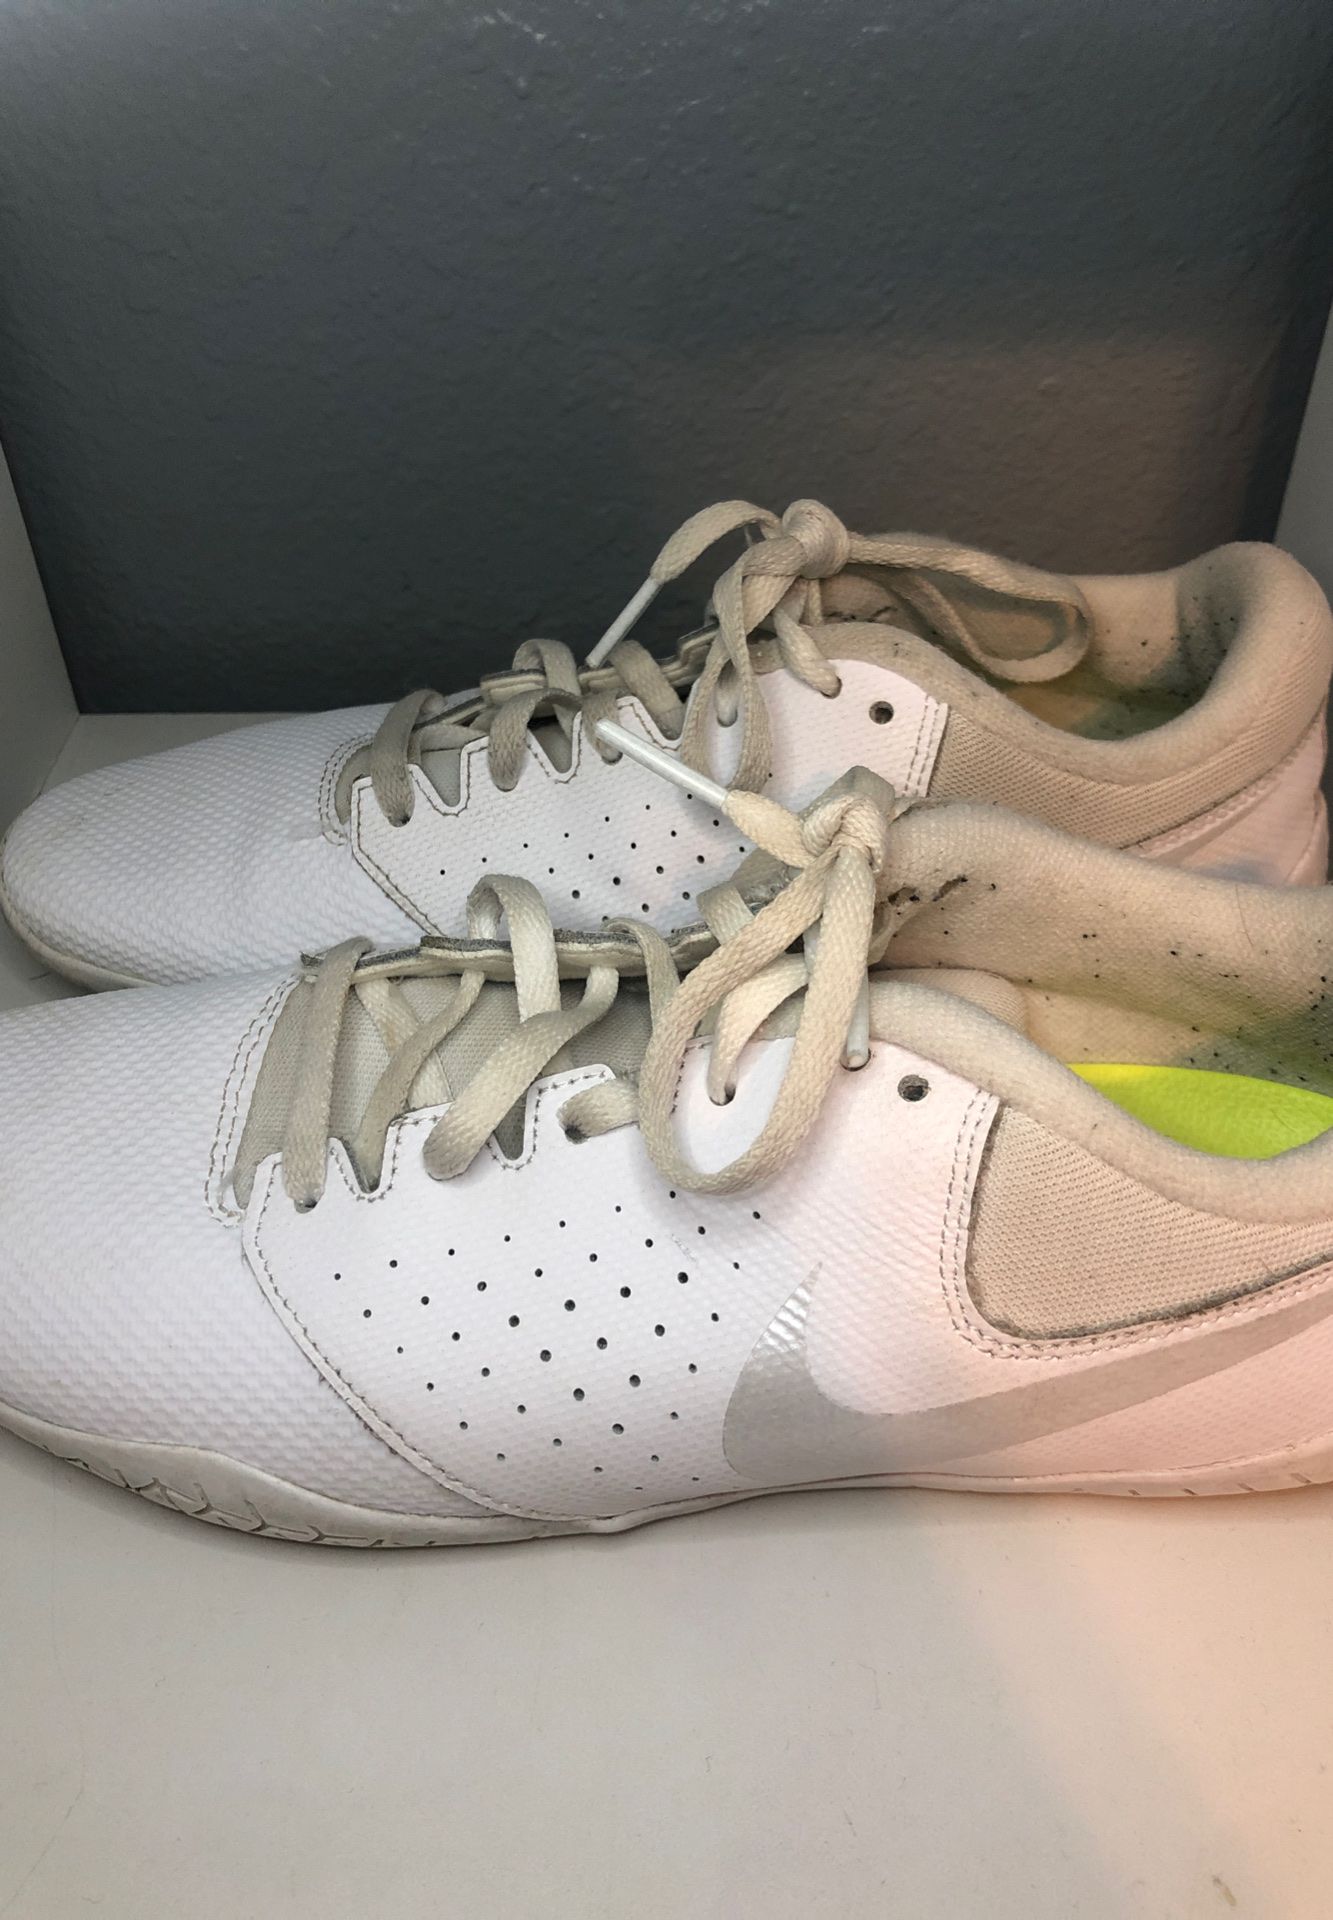 Cheer shoes, Nike